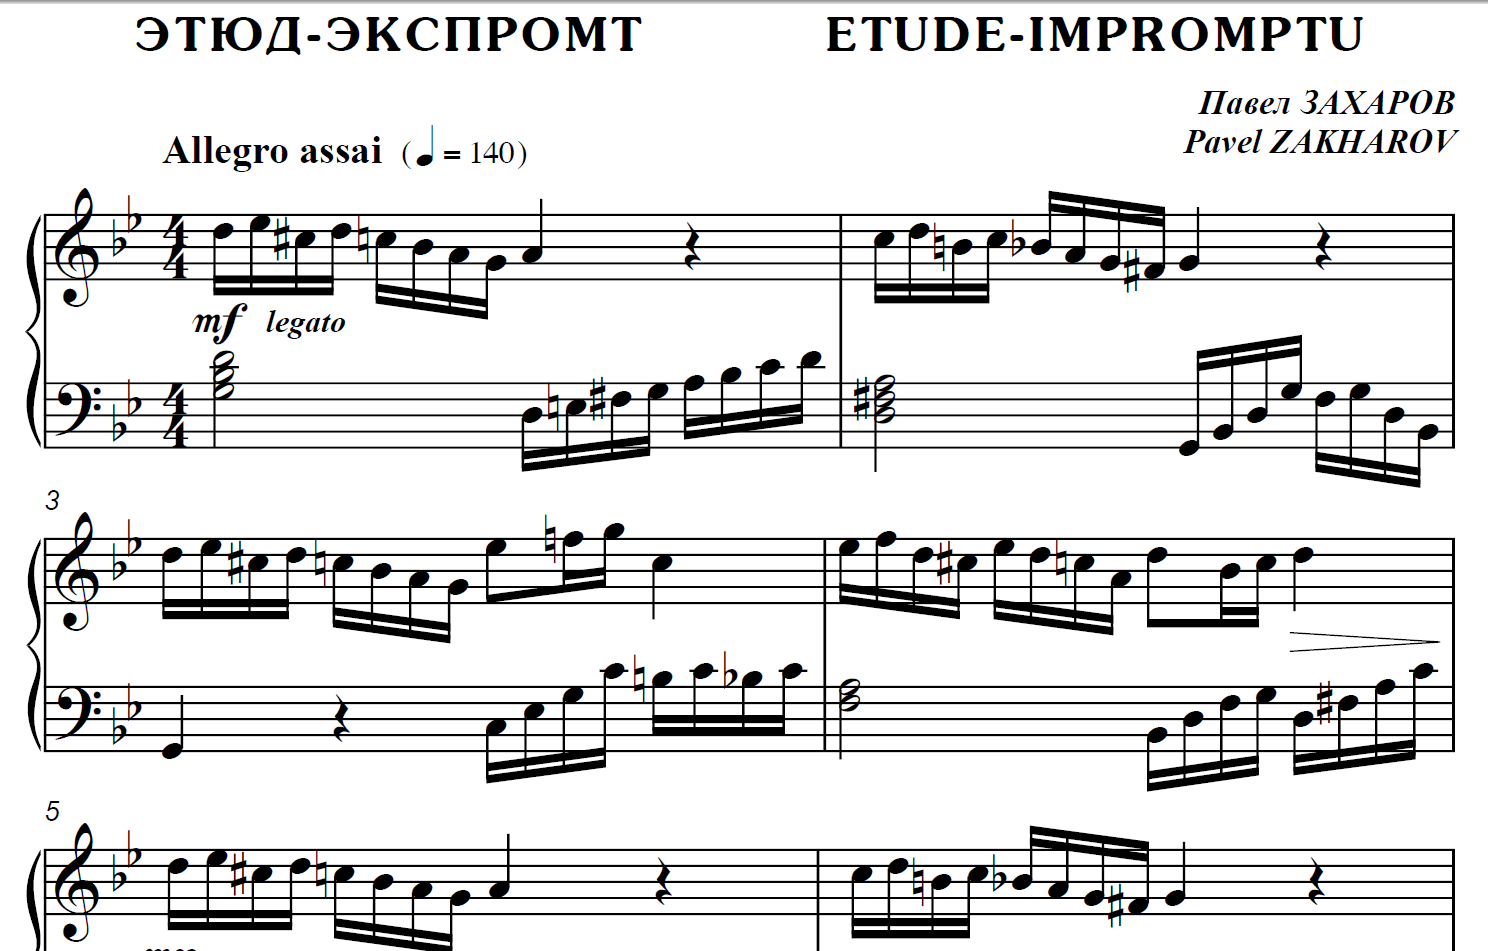 4s21 Etude-Impromptu, PAVEL ZAKHAROV / piano